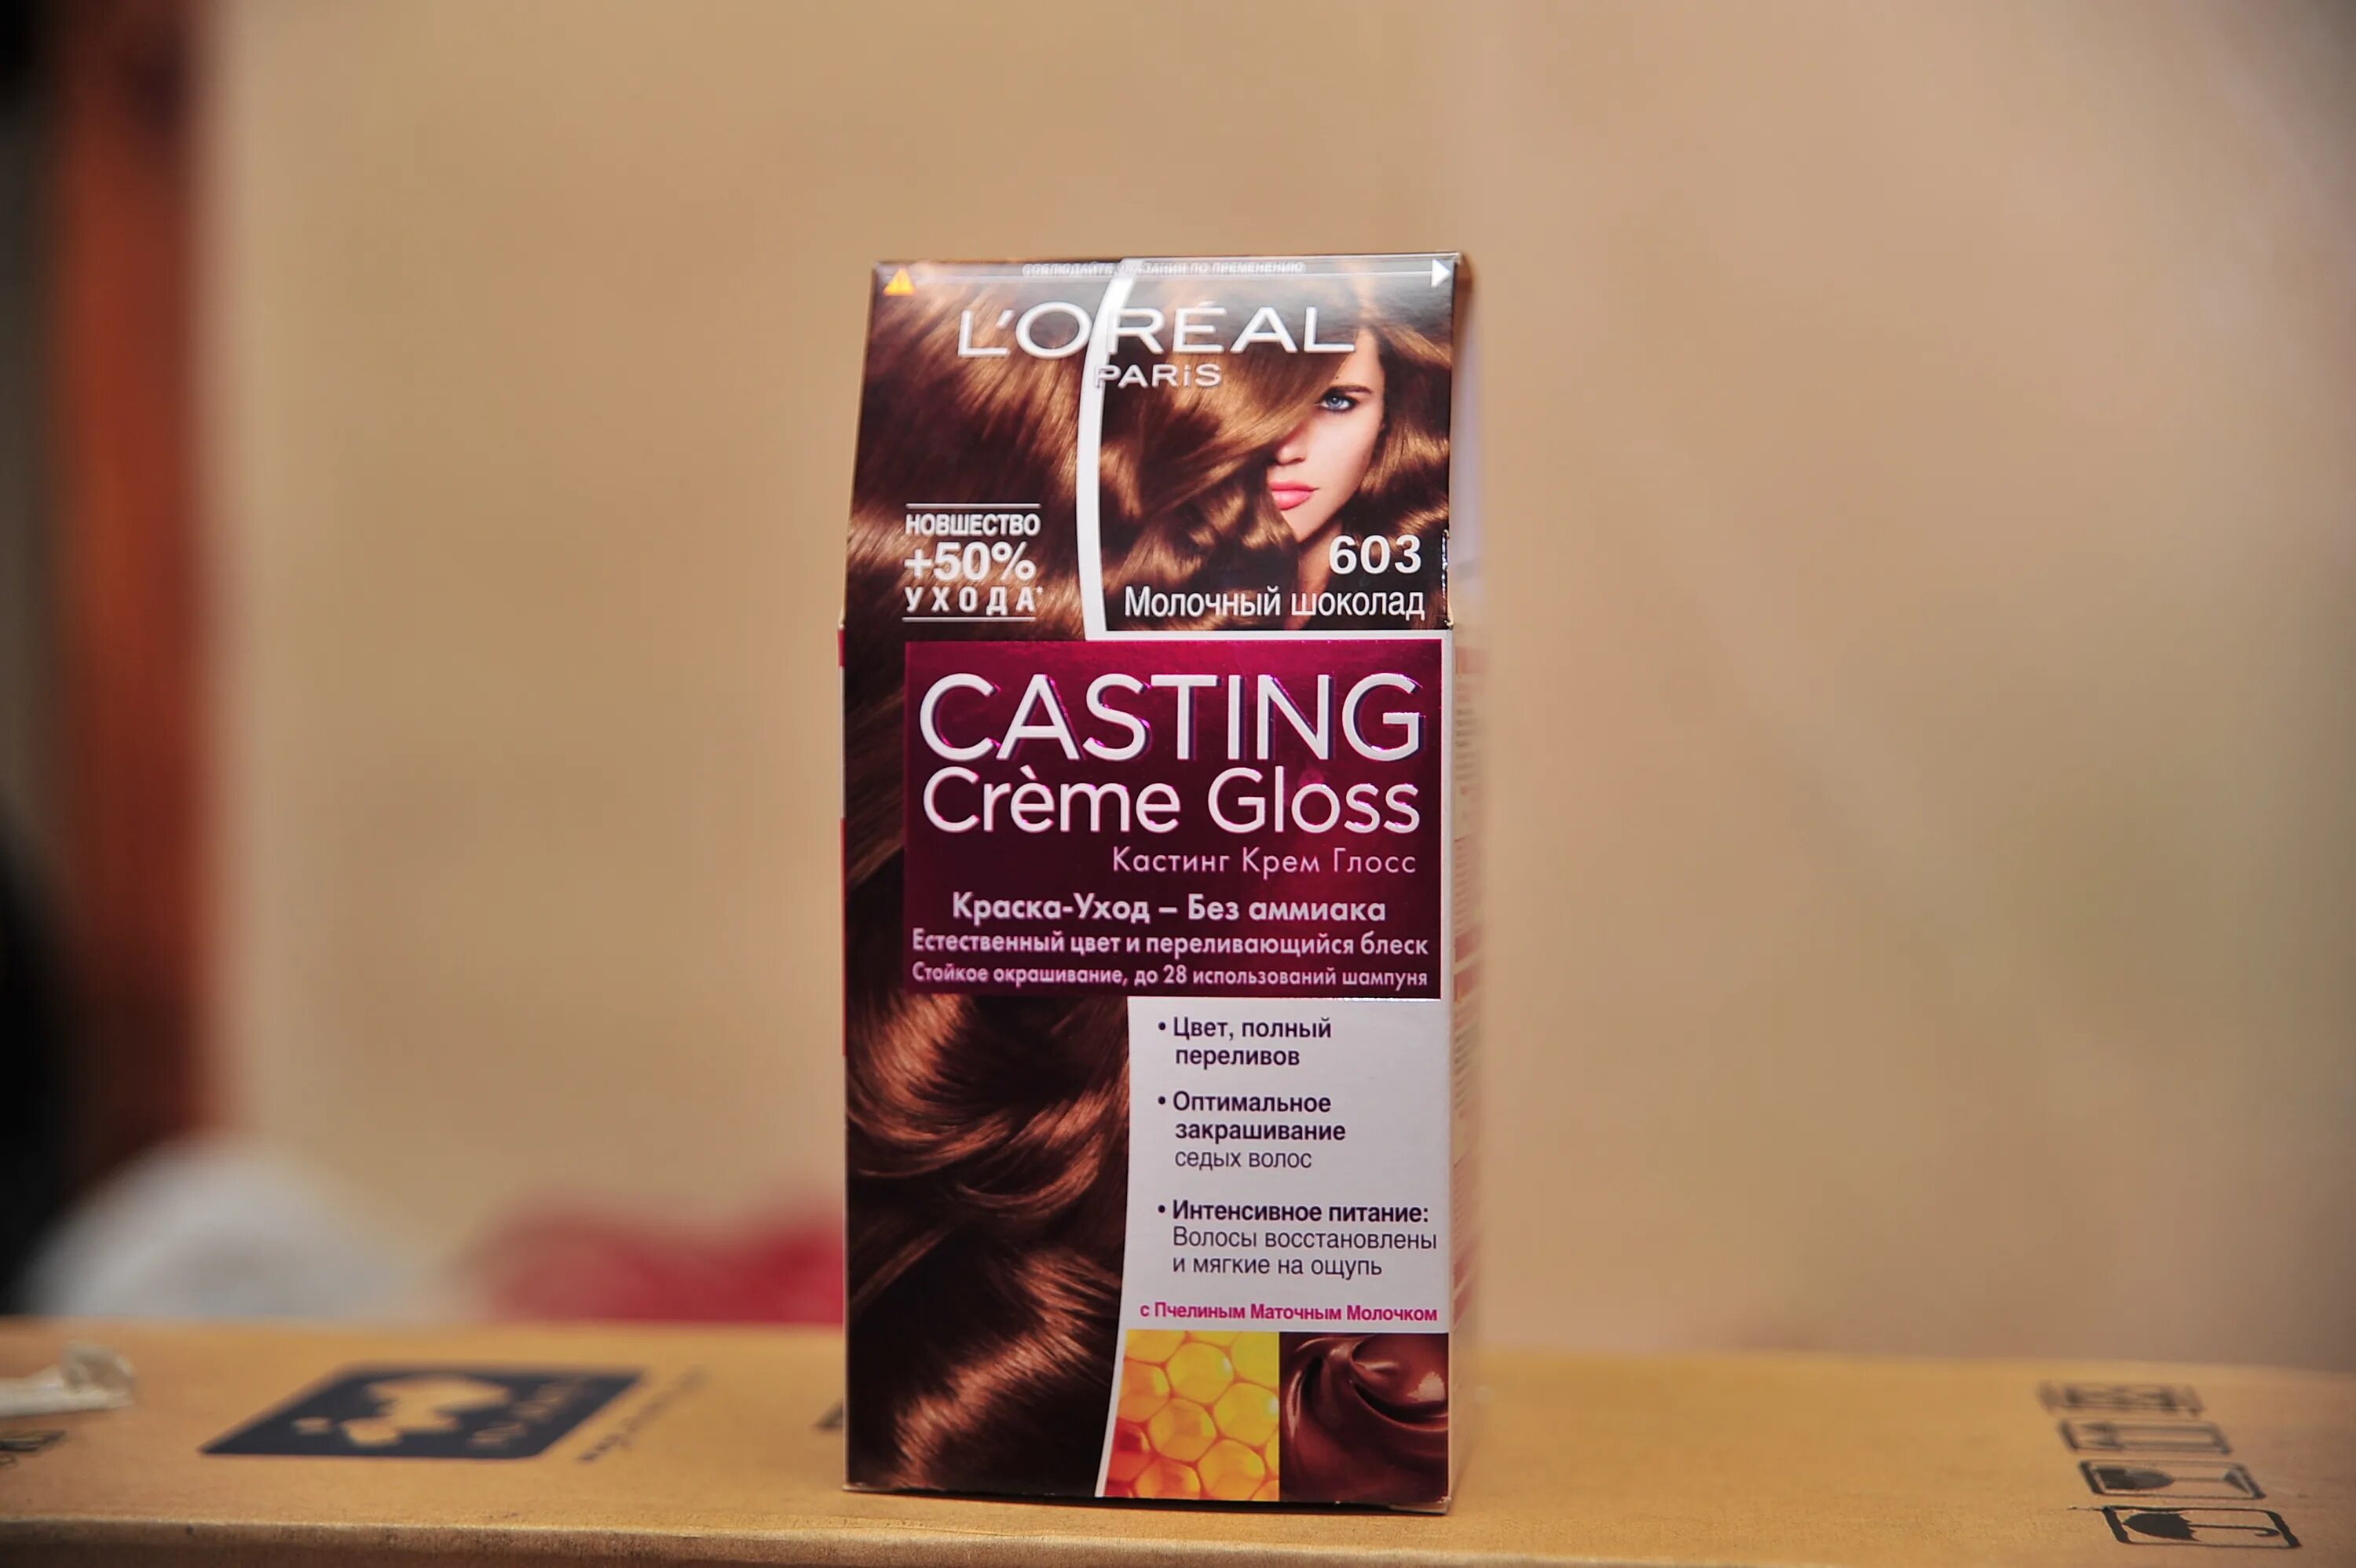 Loreal casting горячий шоколад краска 423. Лореаль кастинг молочный шоколад. Краска для волос лореаль кастинг молочный шоколад. Лореаль крем Глосс молочный шоколад. Лореаль кастинг палитра красок для волос